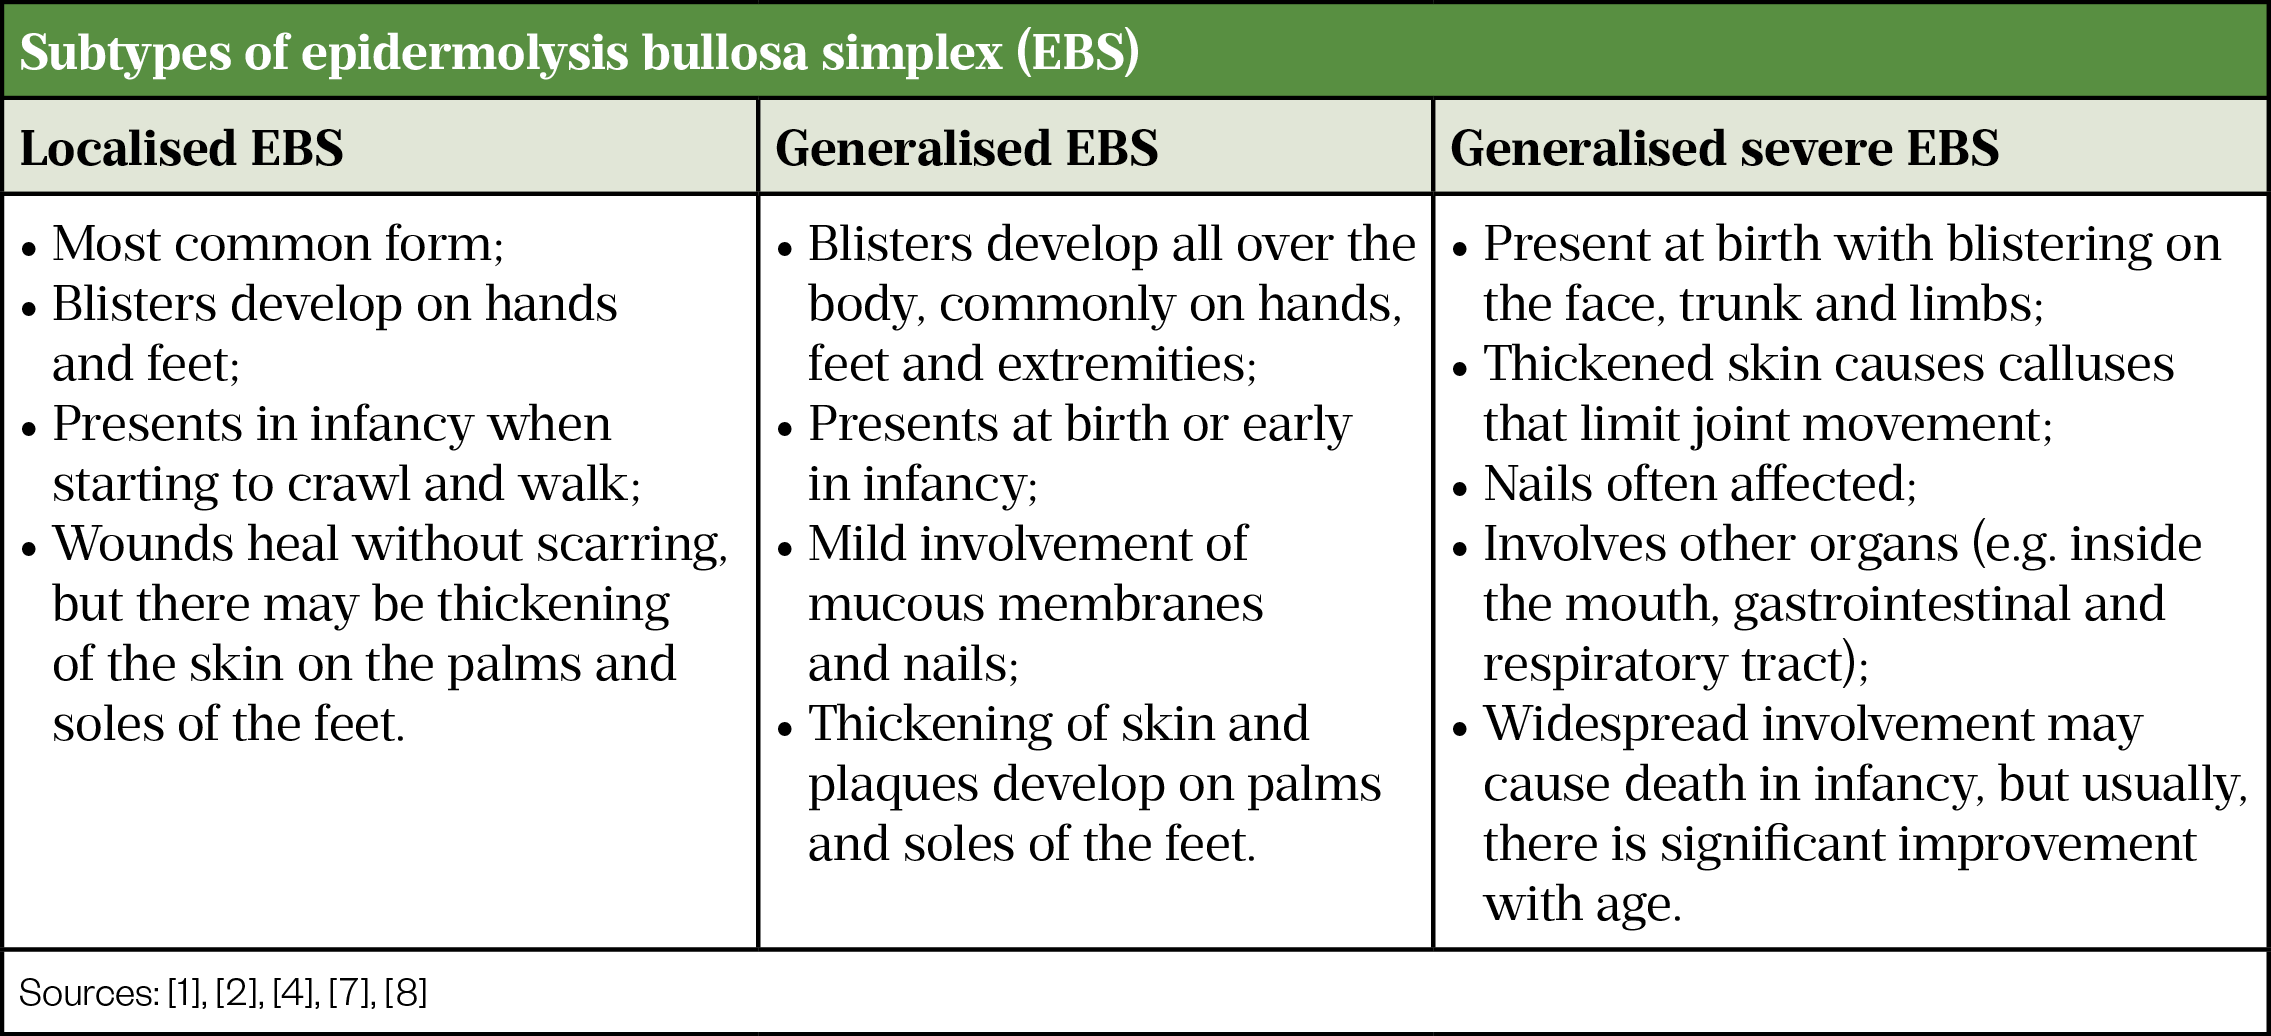 Table 1. Subtypes of epidermolysis bullosa simplex (EBS)